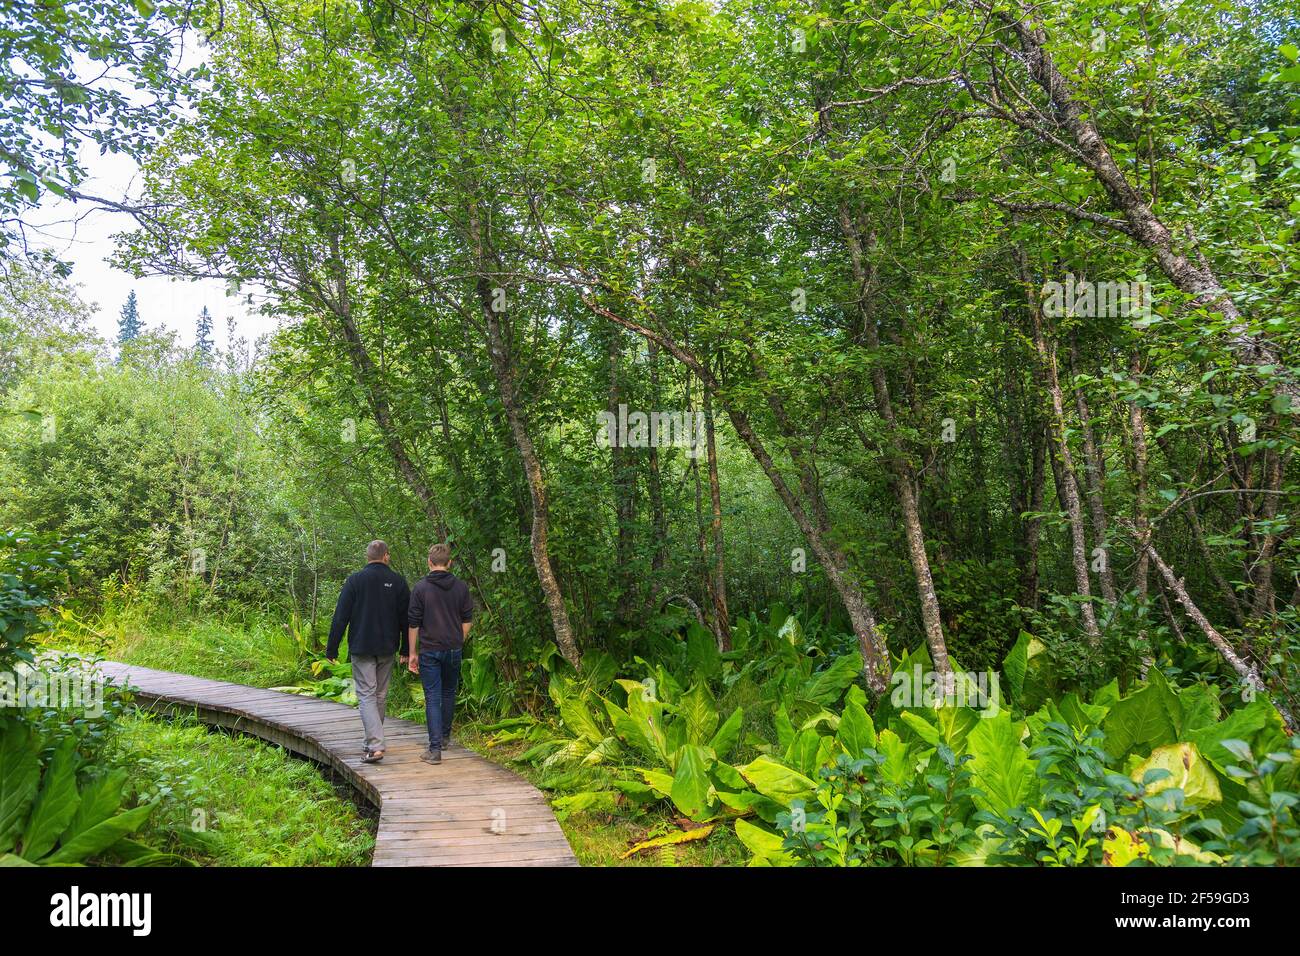 Geographie / Reisen, Kanada, Mount Revelstoke National Park, Skunk Cabbage Boardwalk Trail, Model-released Stockfoto